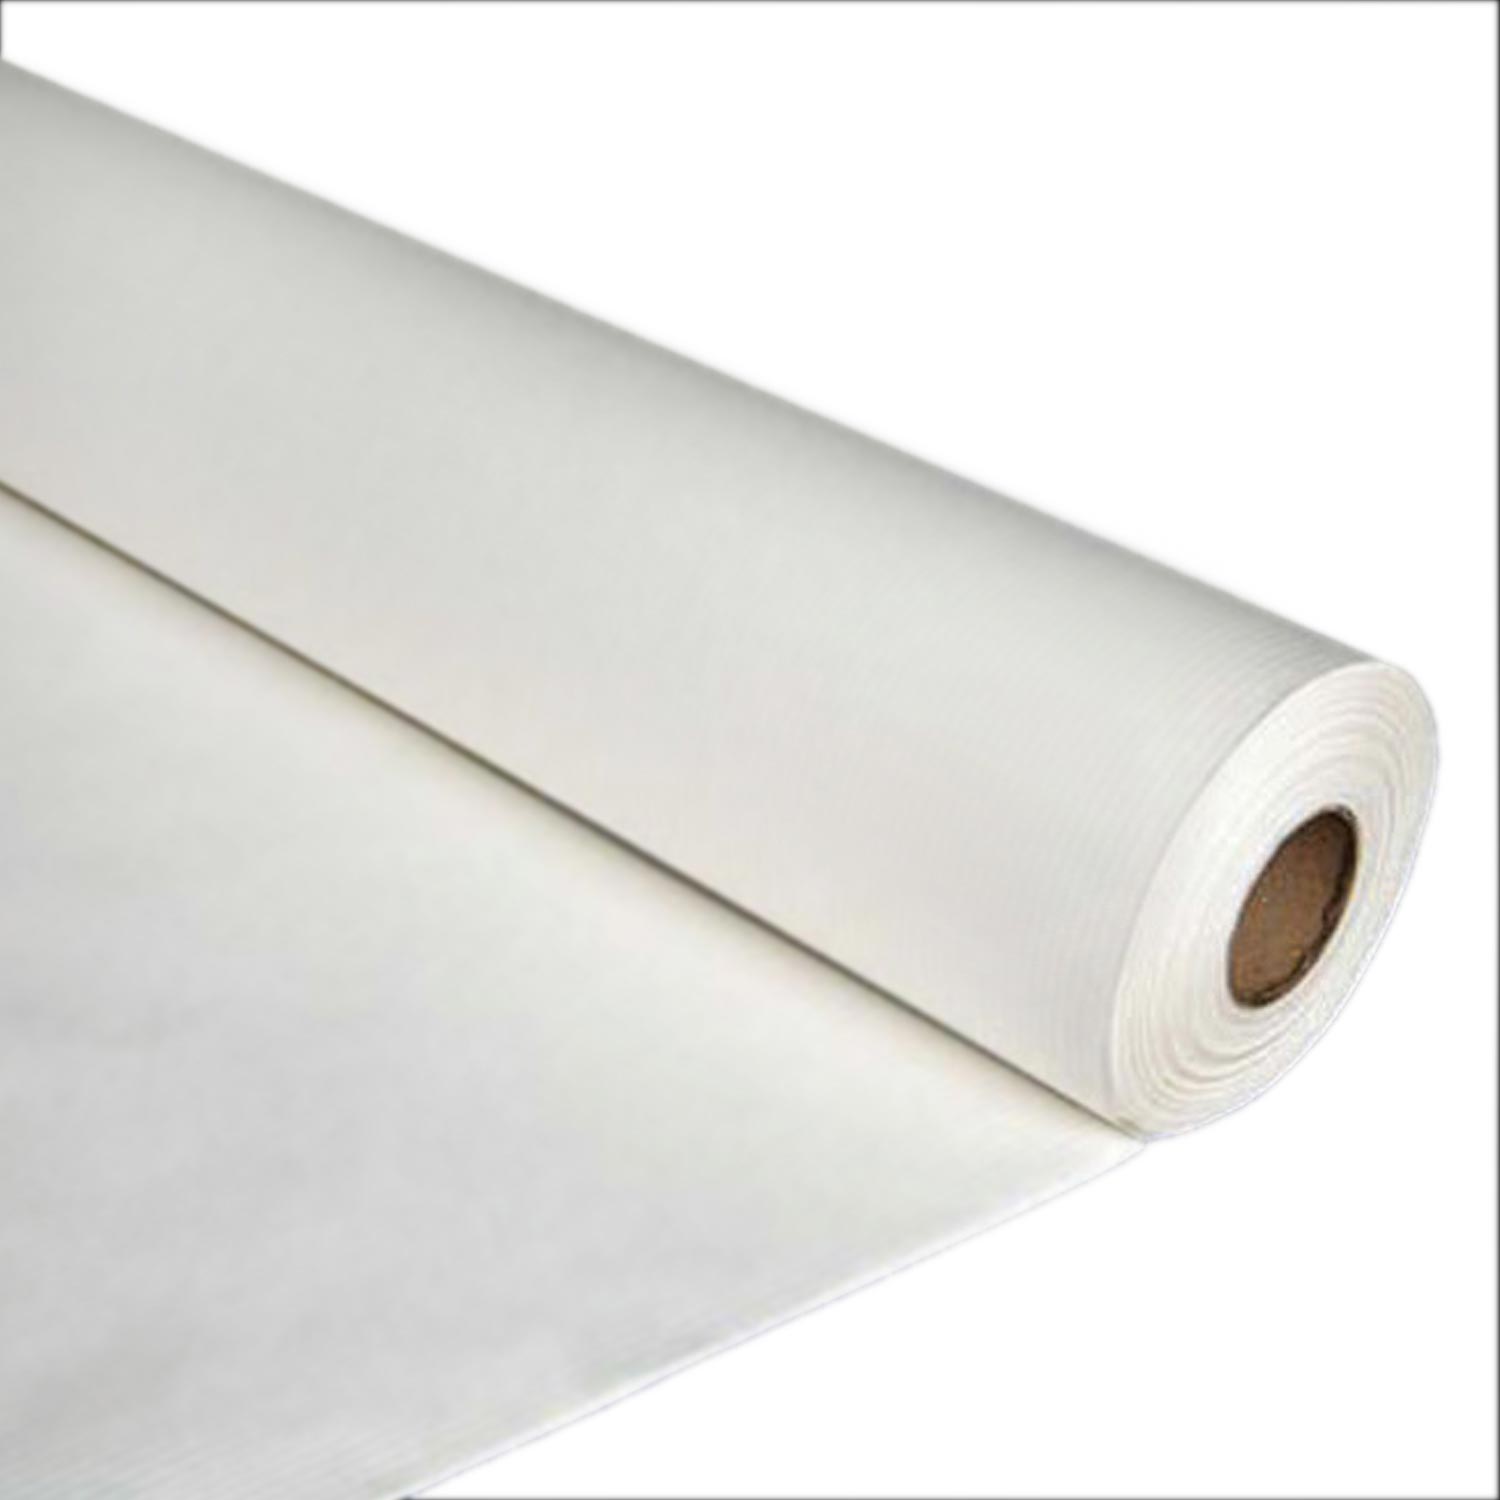 Nappe en papier - 80 x 80 cm - Blanc mat COGIR Lot de 200 (Restaurant)